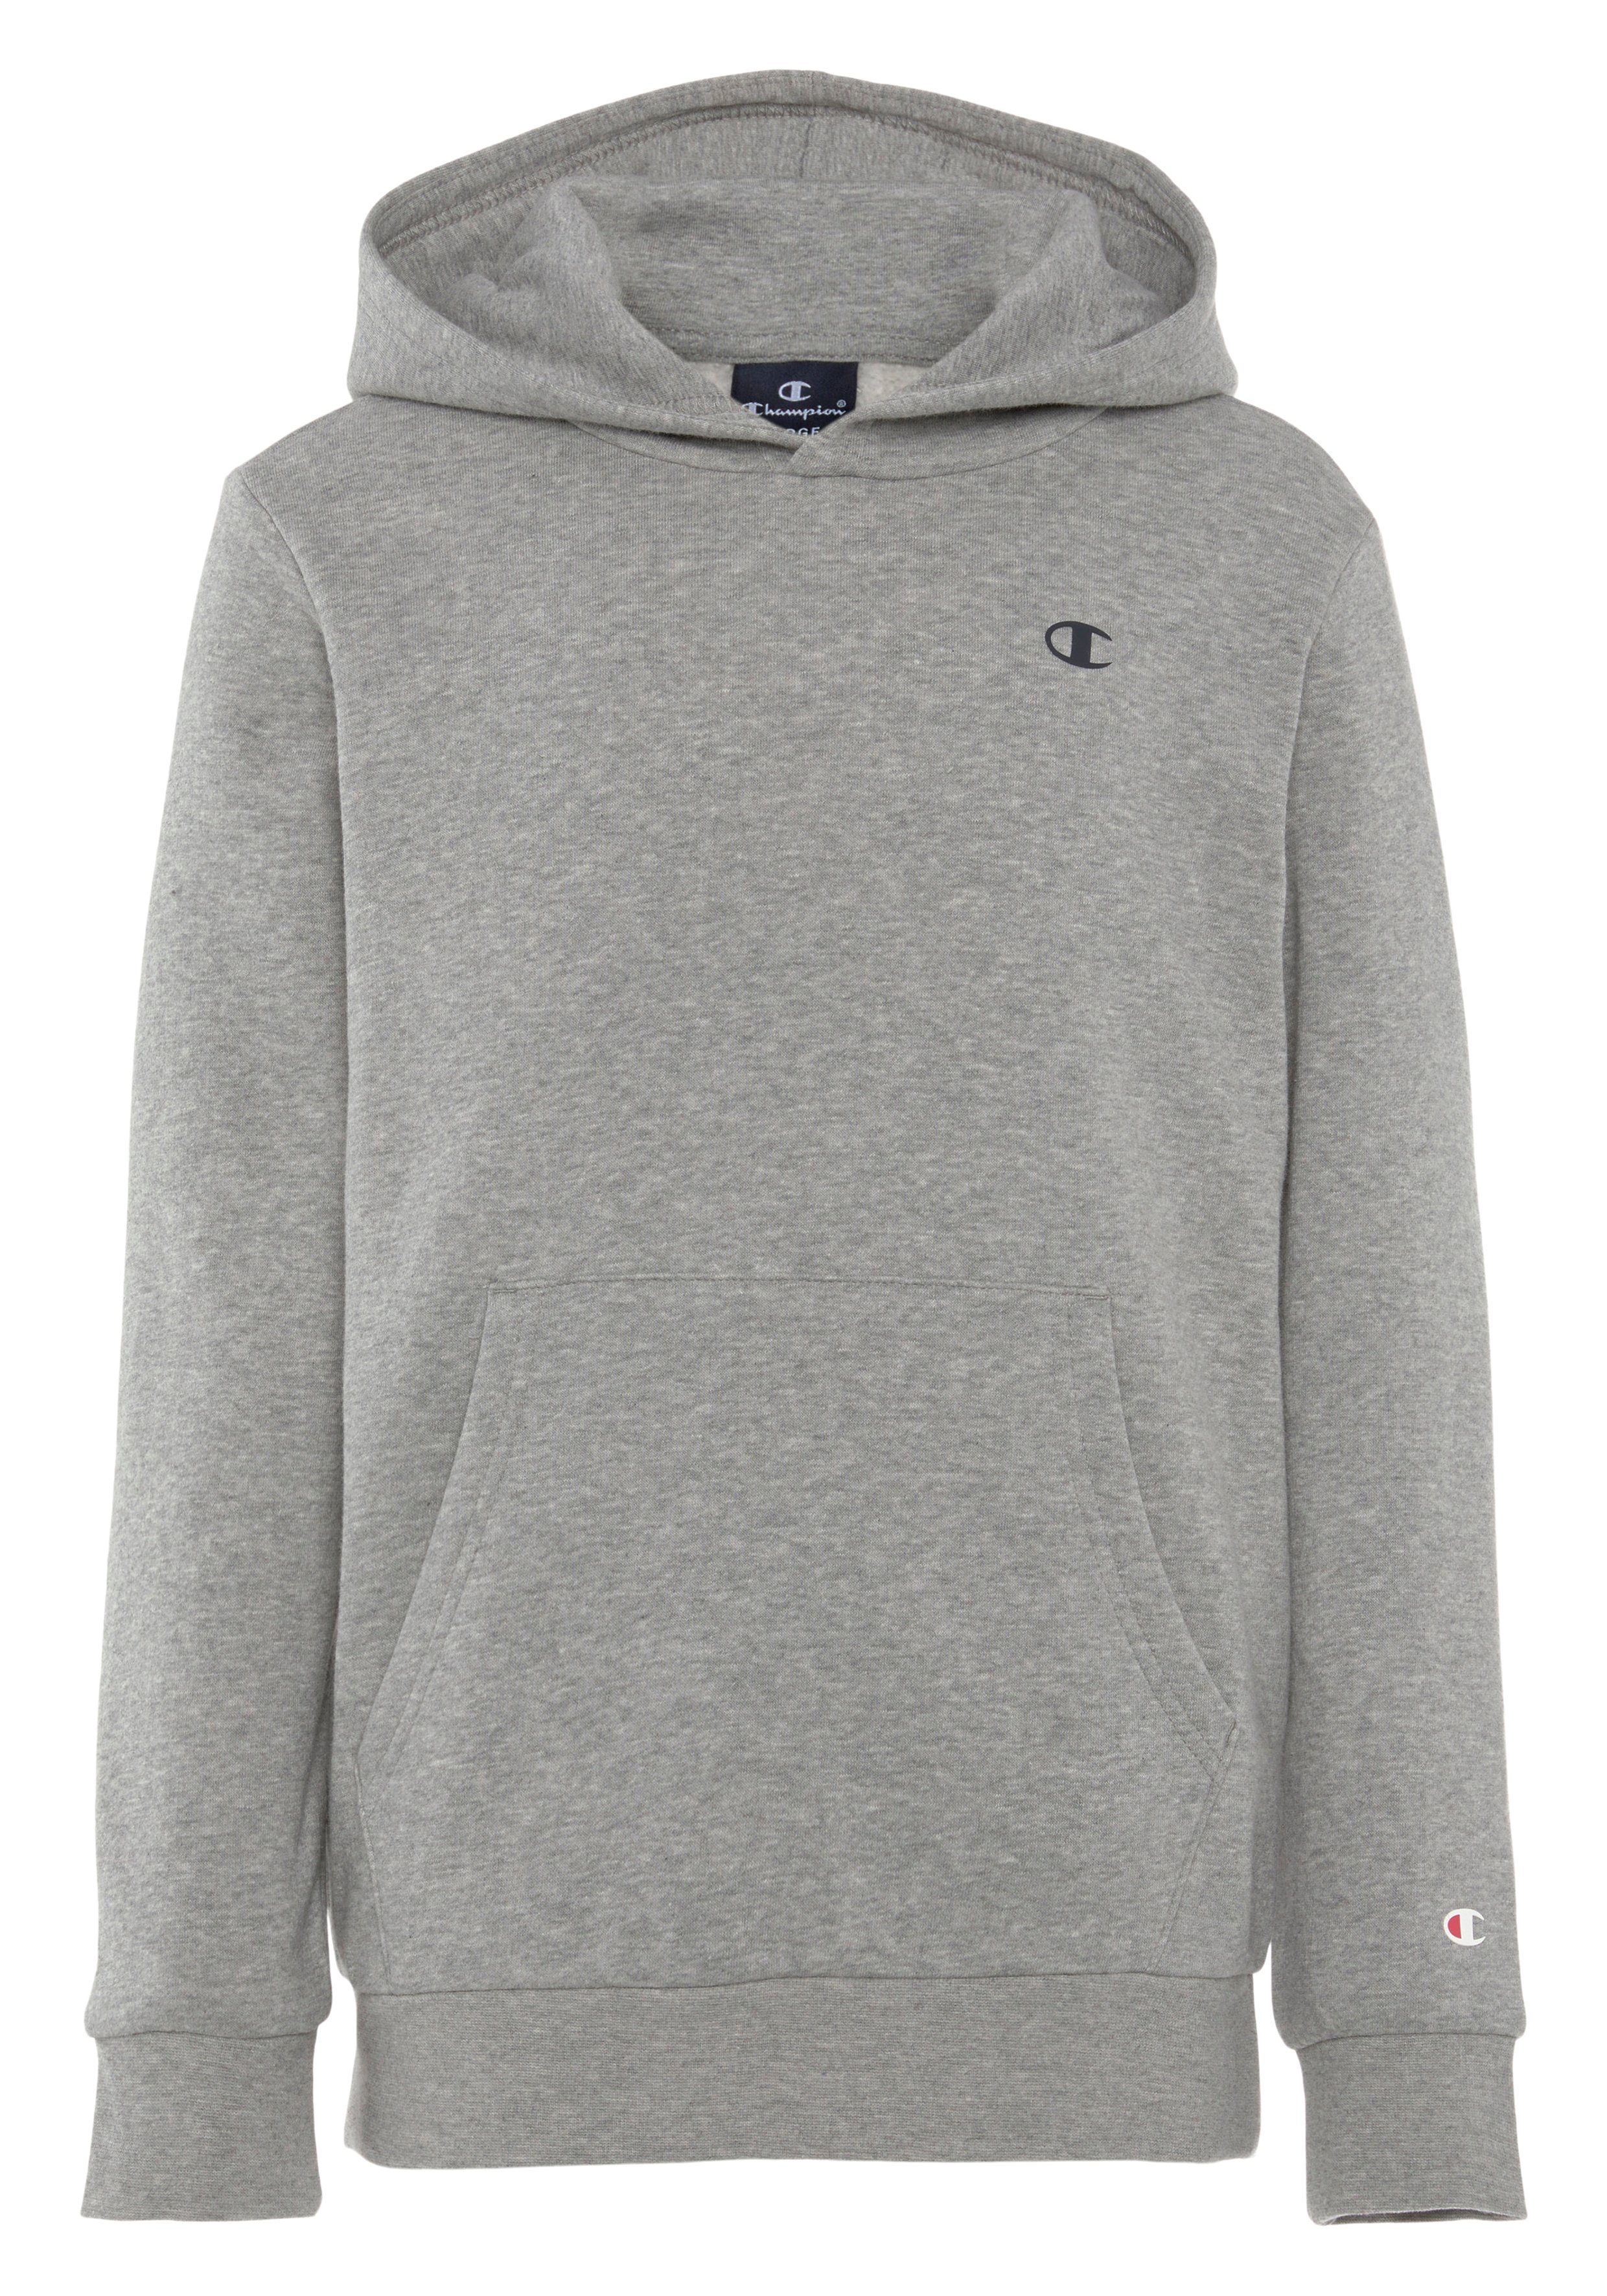 - Champion Basic Kinder grau Sweatshirt Sweatshirt für Hooded